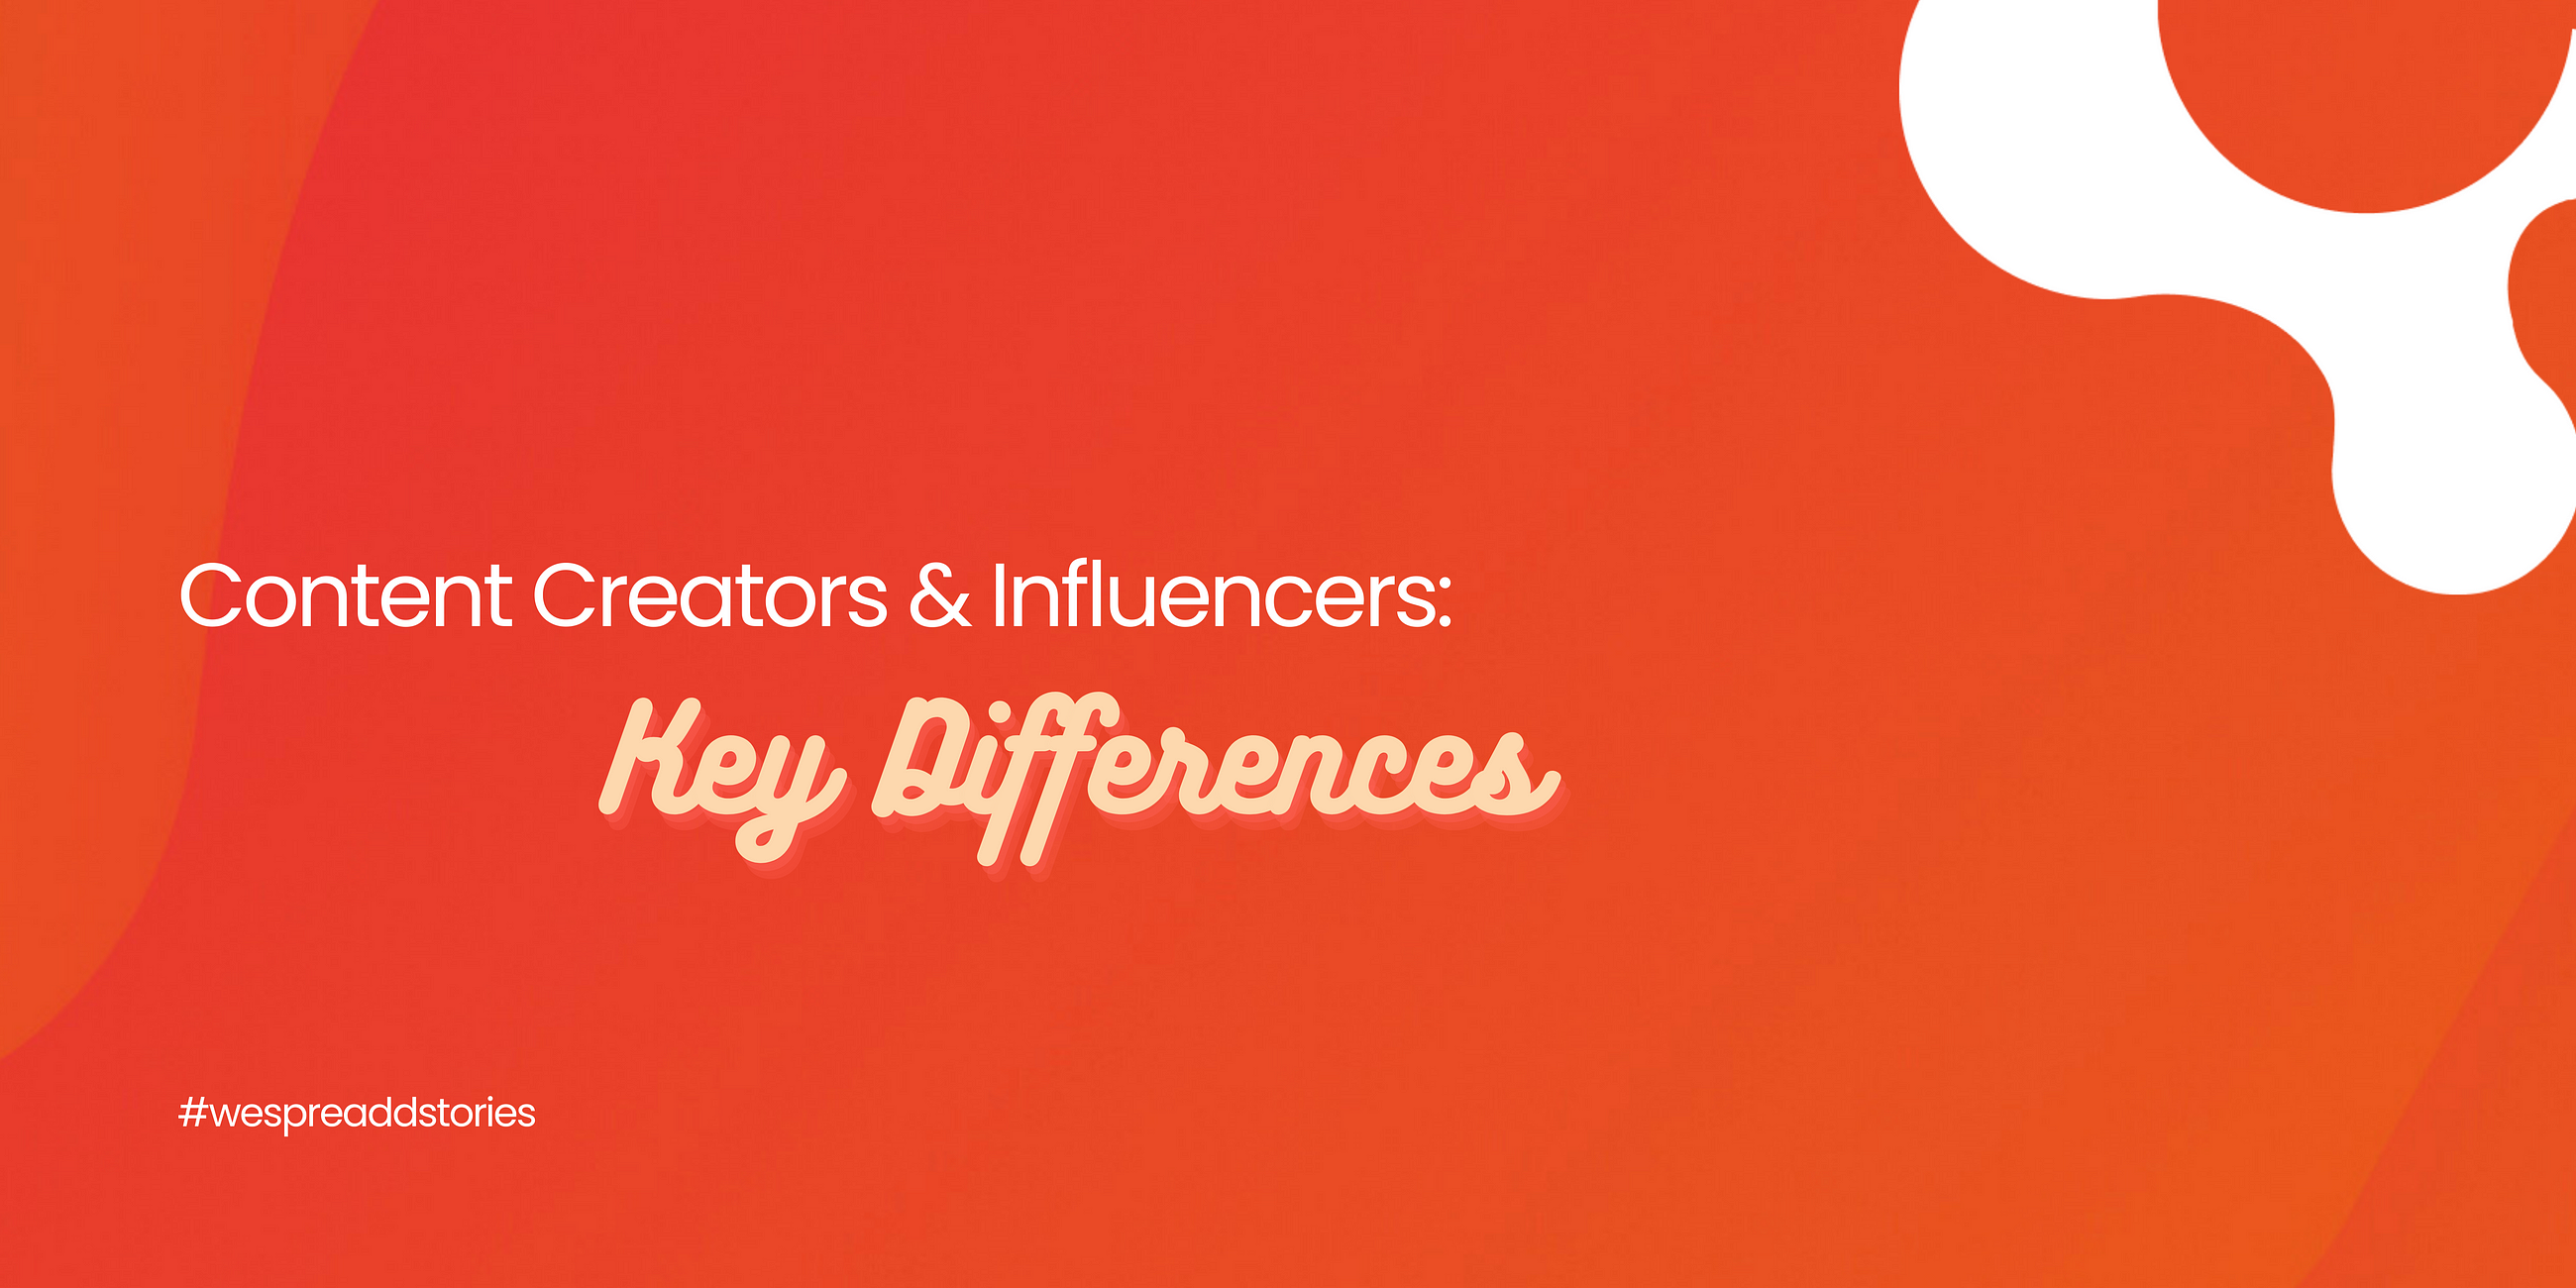 <div>Content Creators & Influencers: Key Differences</div>